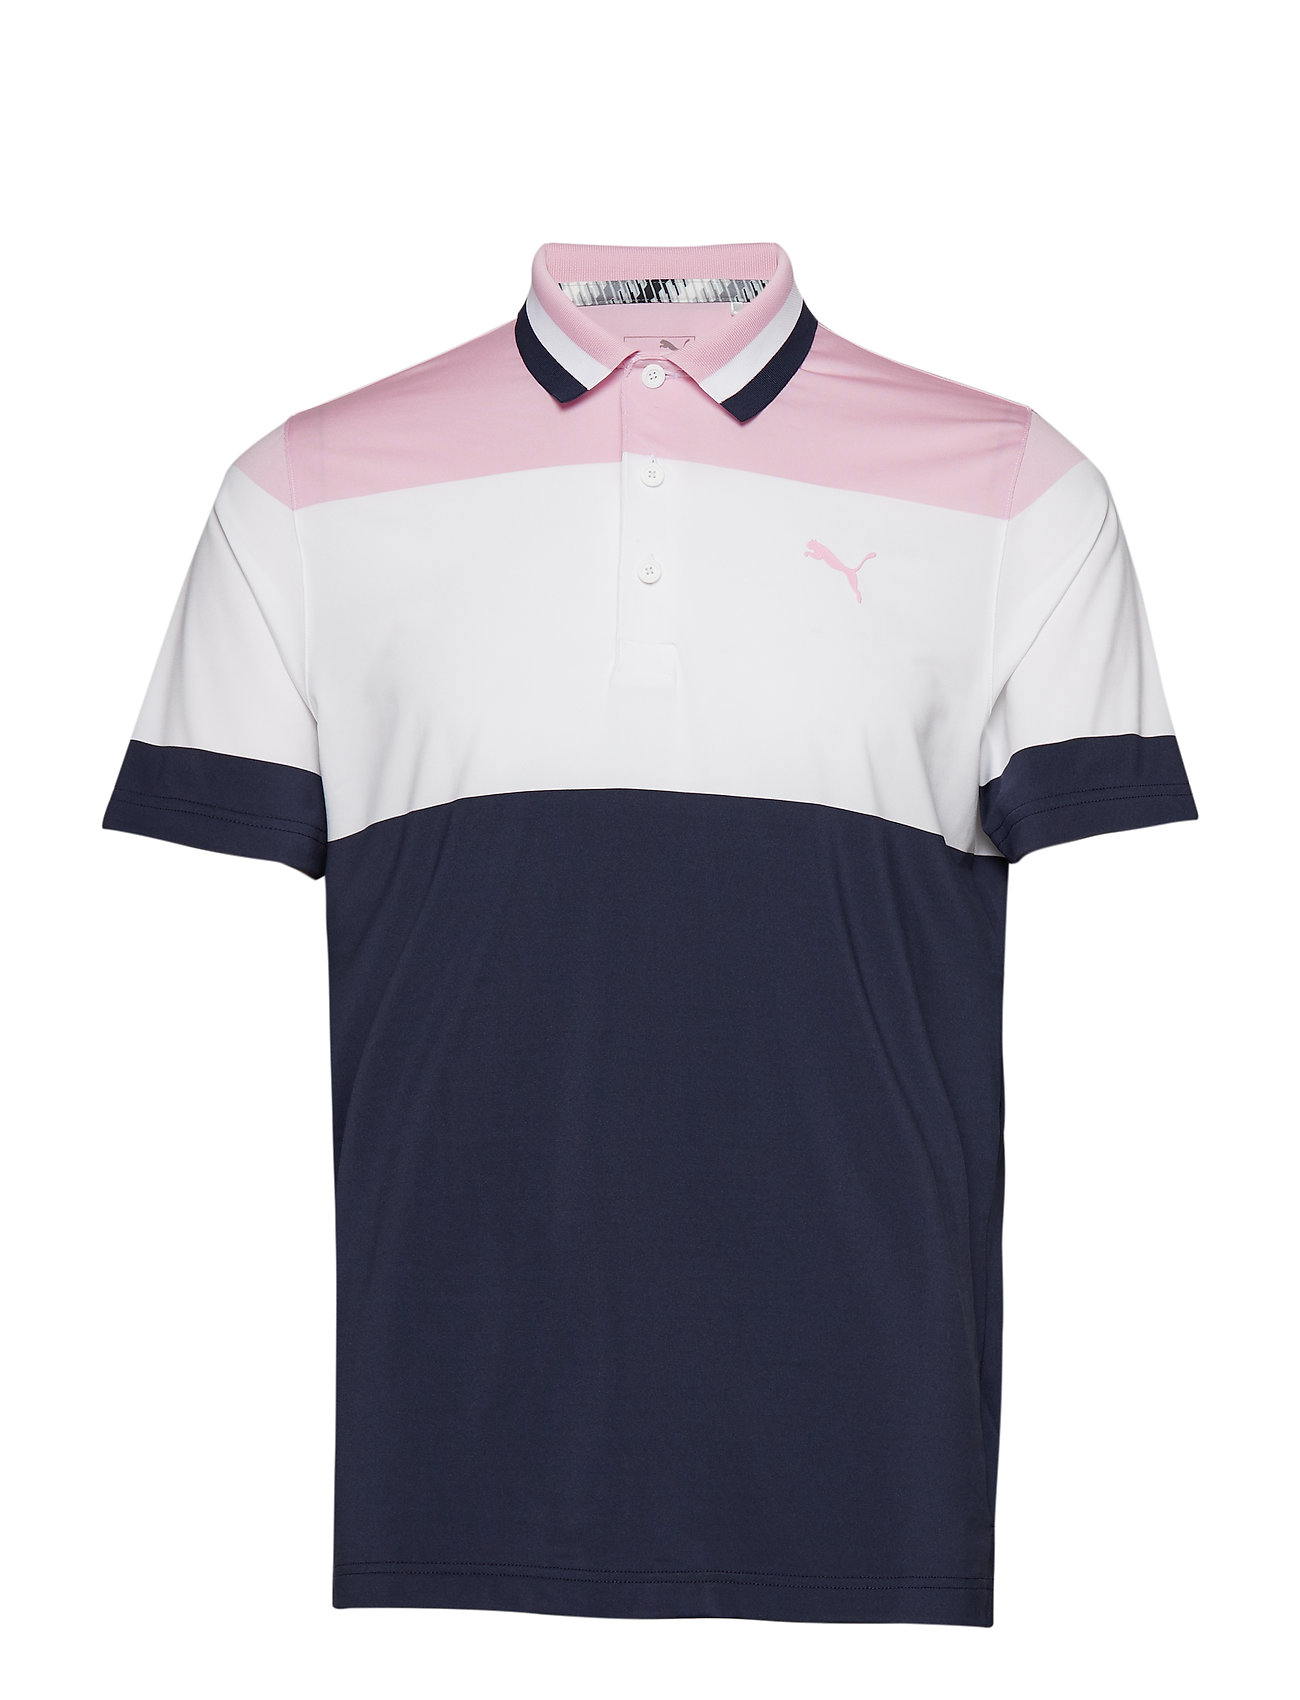 PUMA Golf Nineties Polo (Pale Pink 